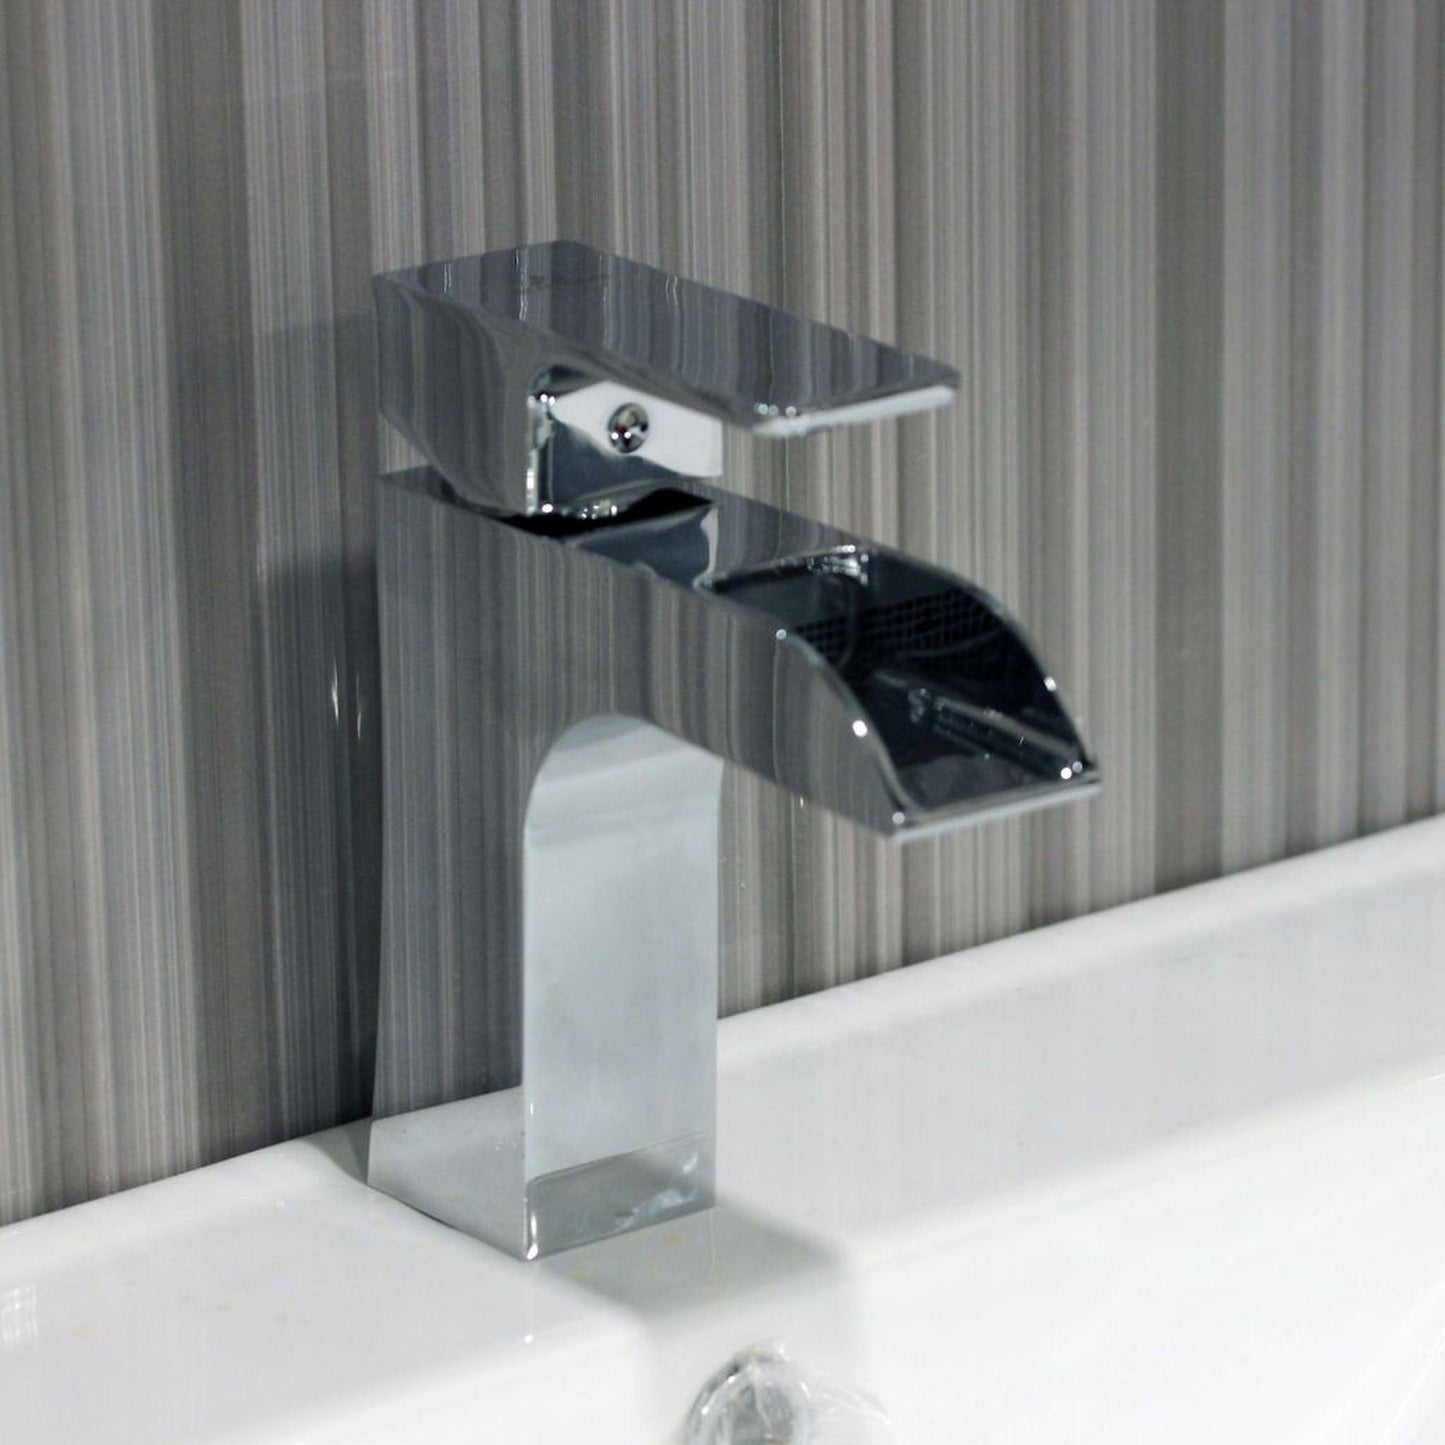 Blossom F01 103 5" x 7" Chrome Lever Handle Bathroom Sink Single Hole Faucet